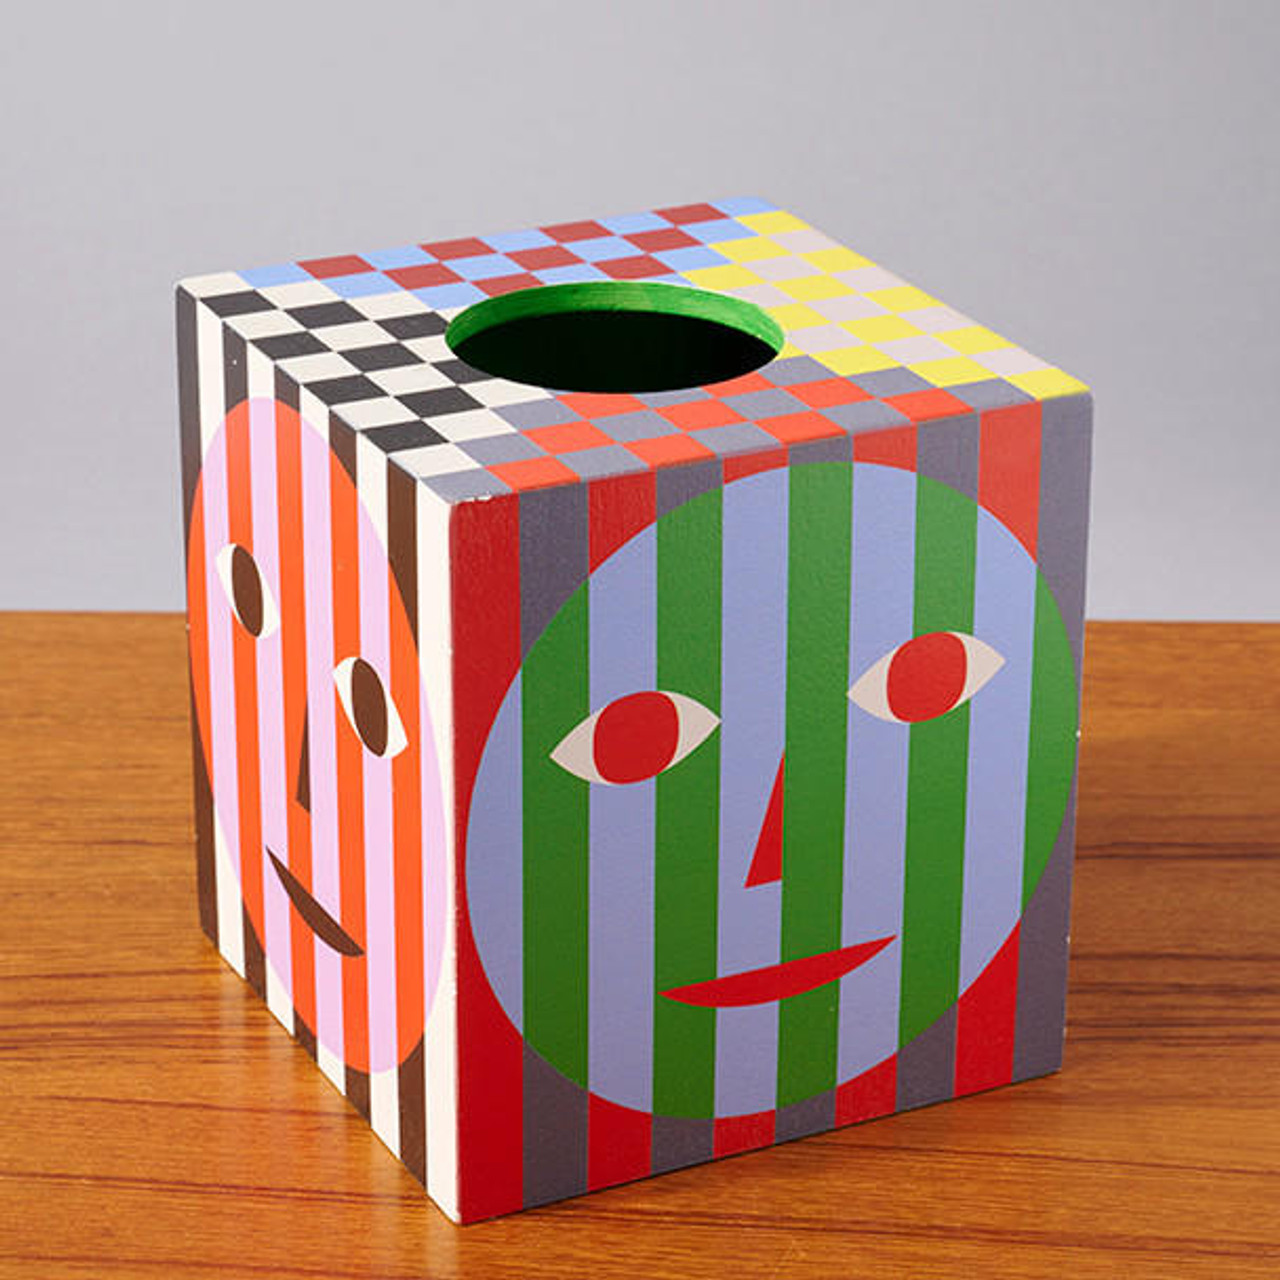 Areaware – Everybody Tissue Box designed by Dusen Dusen